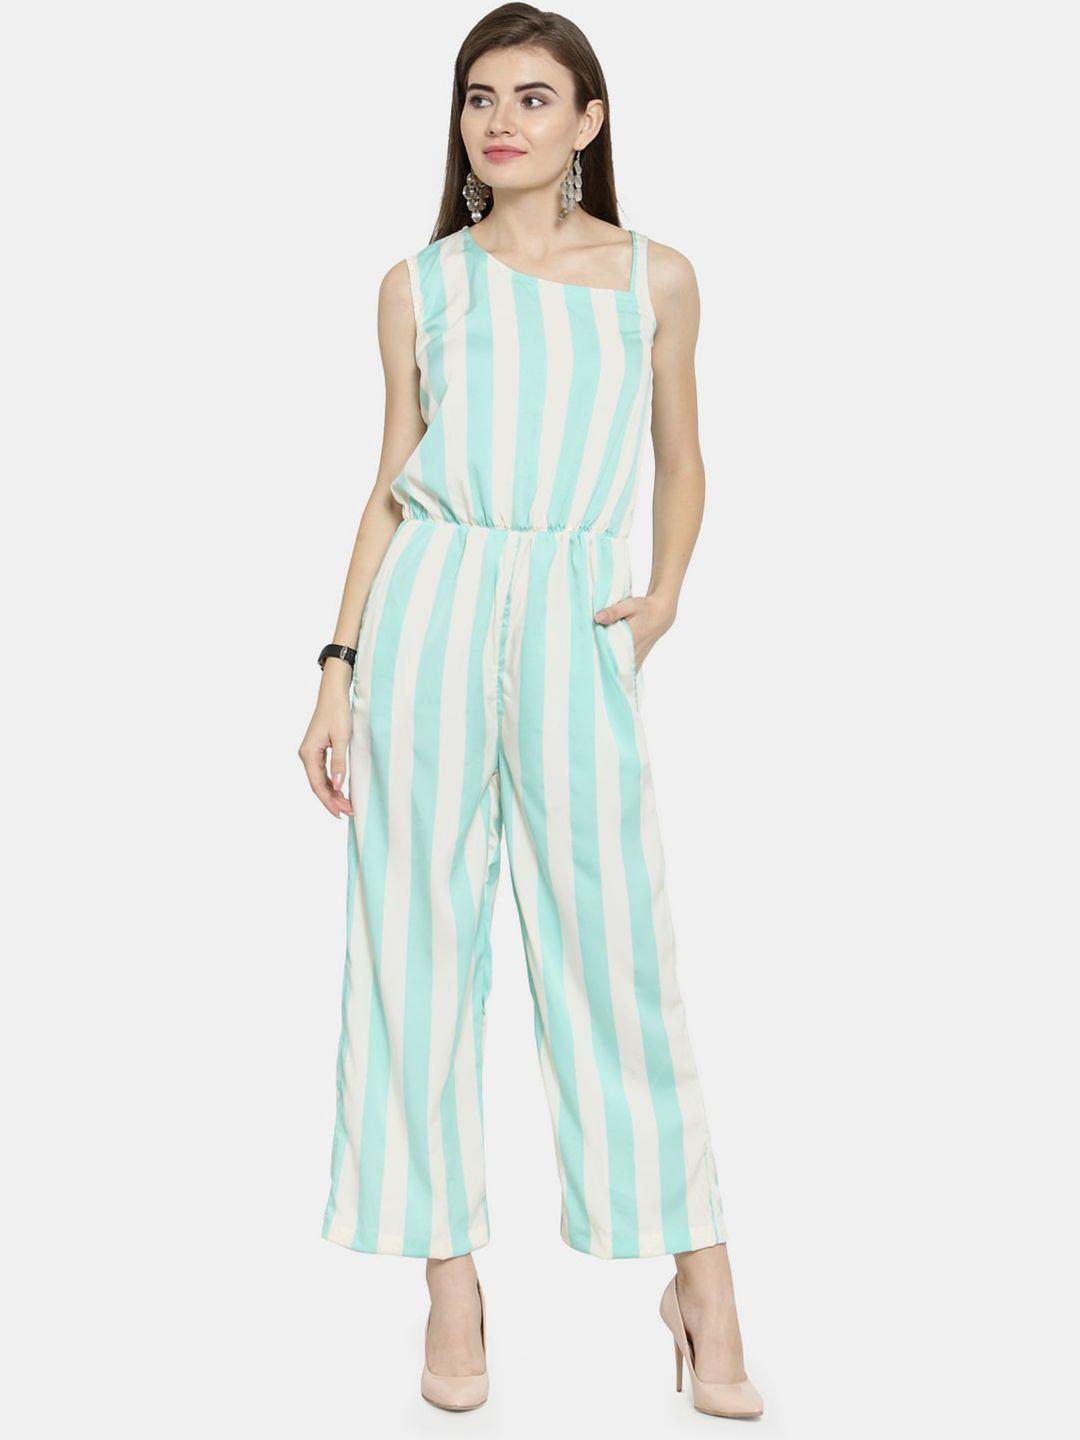 enchanted drapes blue & white striped basic jumpsuit